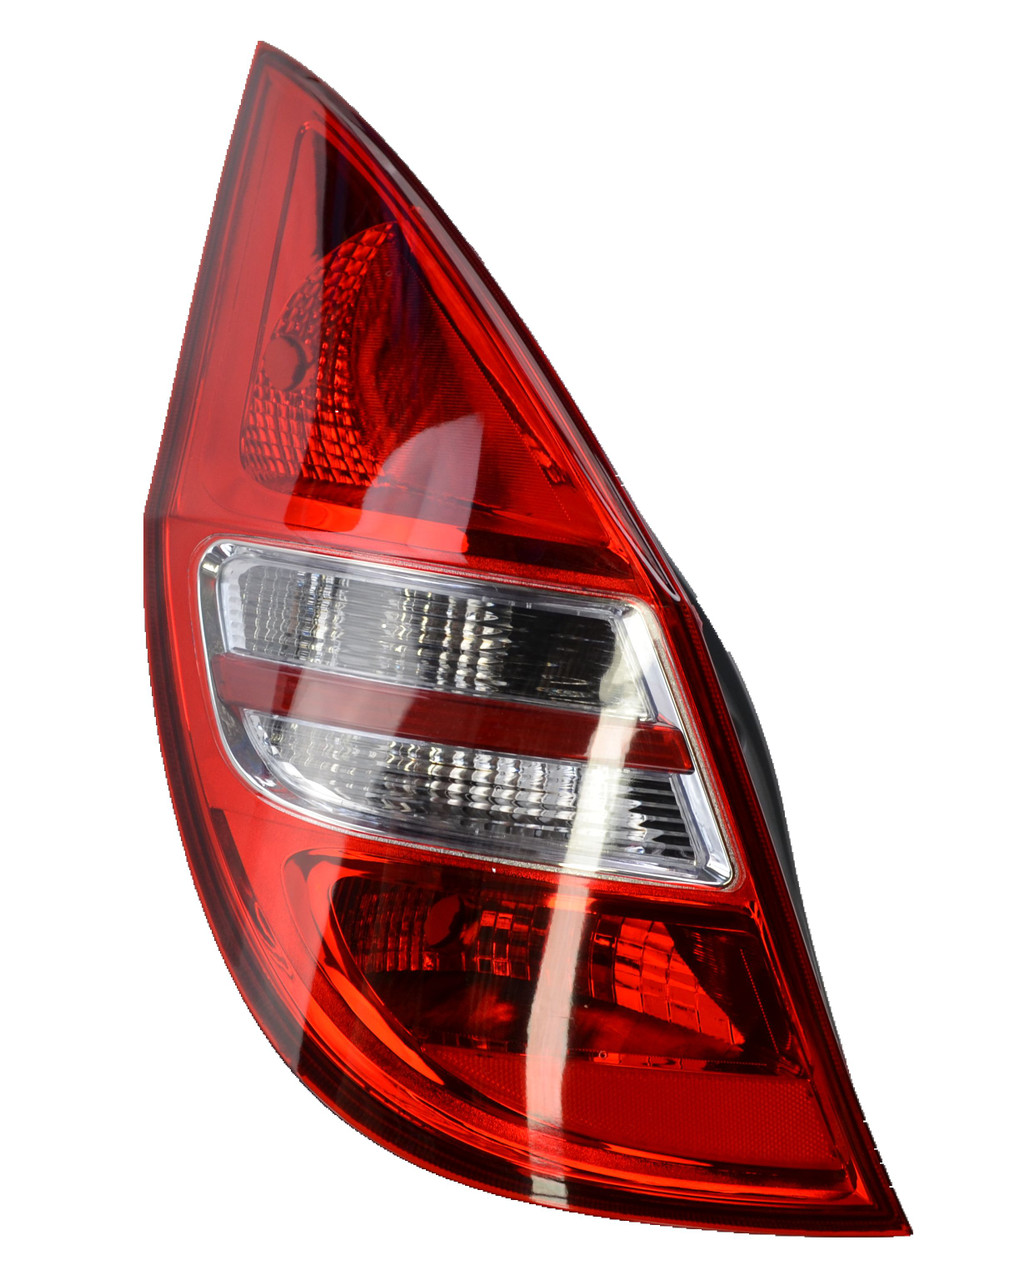 Tail light for Hyundai i30 FD 08/07-04/12 New Left Rear Lamp Hatchback 08 09 10 11